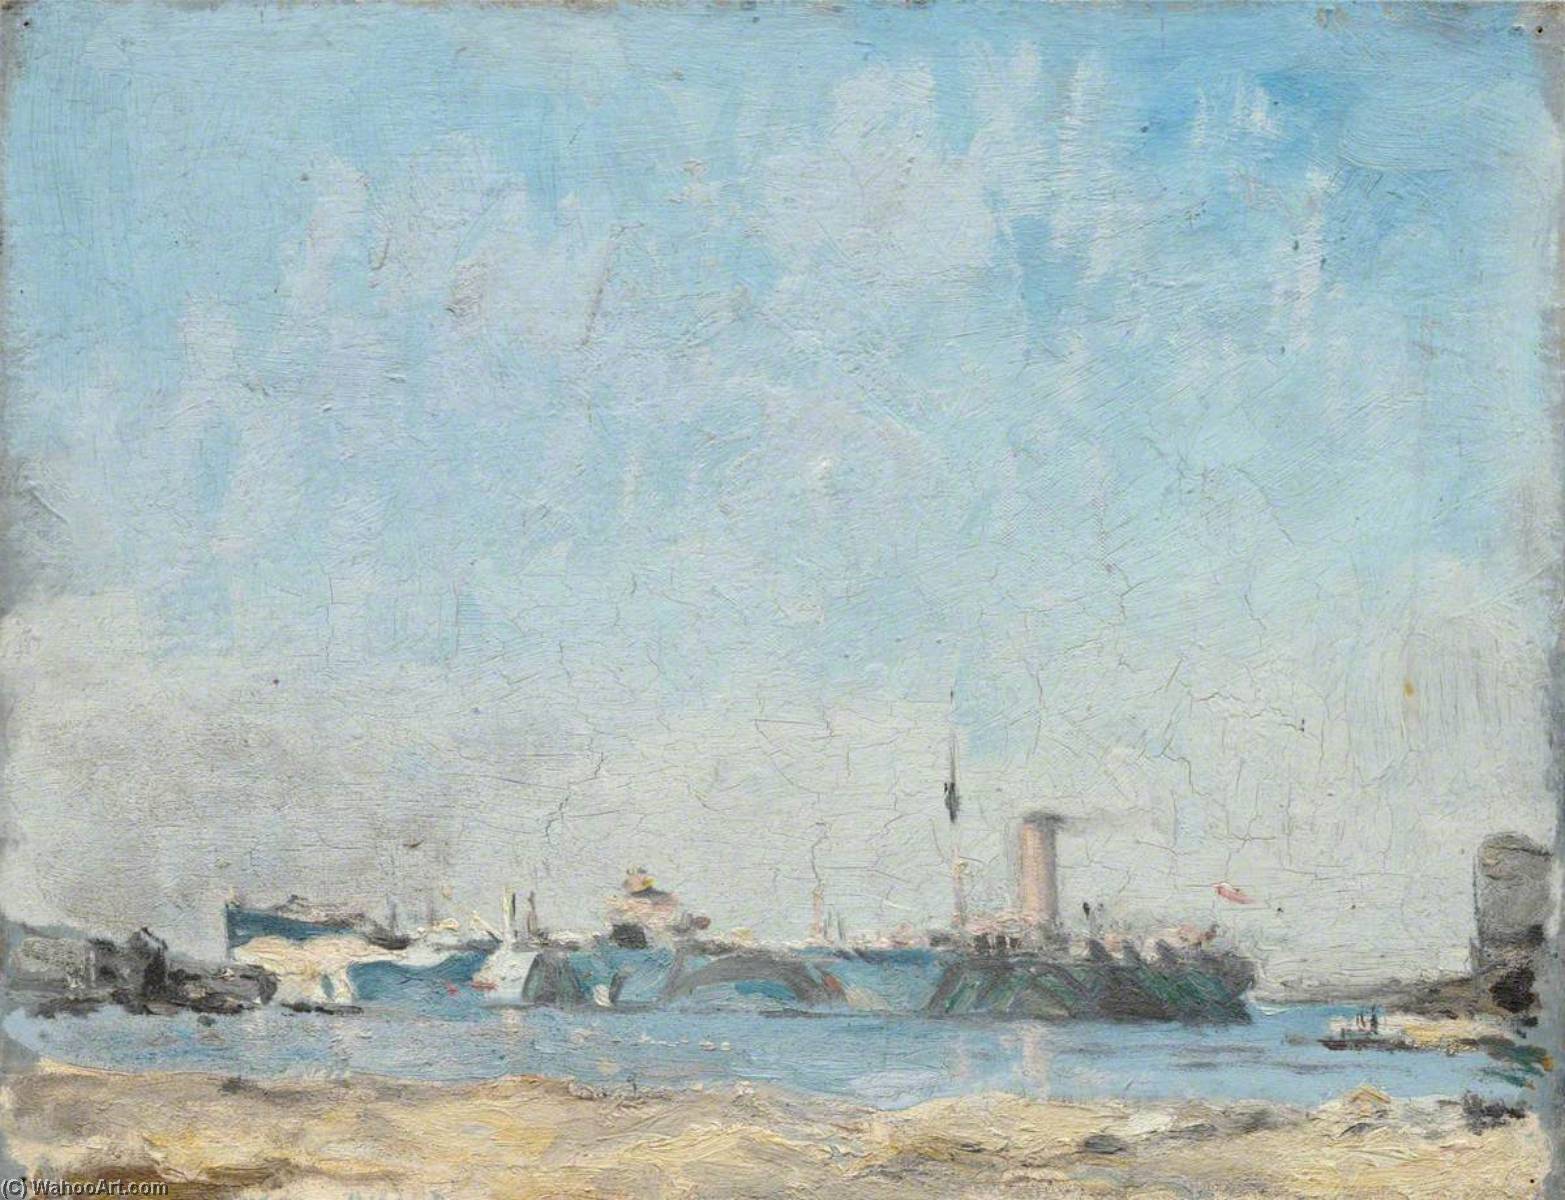 Order Artwork Replica SS `Natica` (Oiler) at Port Said, 1919 by Sholto Johnstone Douglas (Inspired By) (1871-1958) | ArtsDot.com